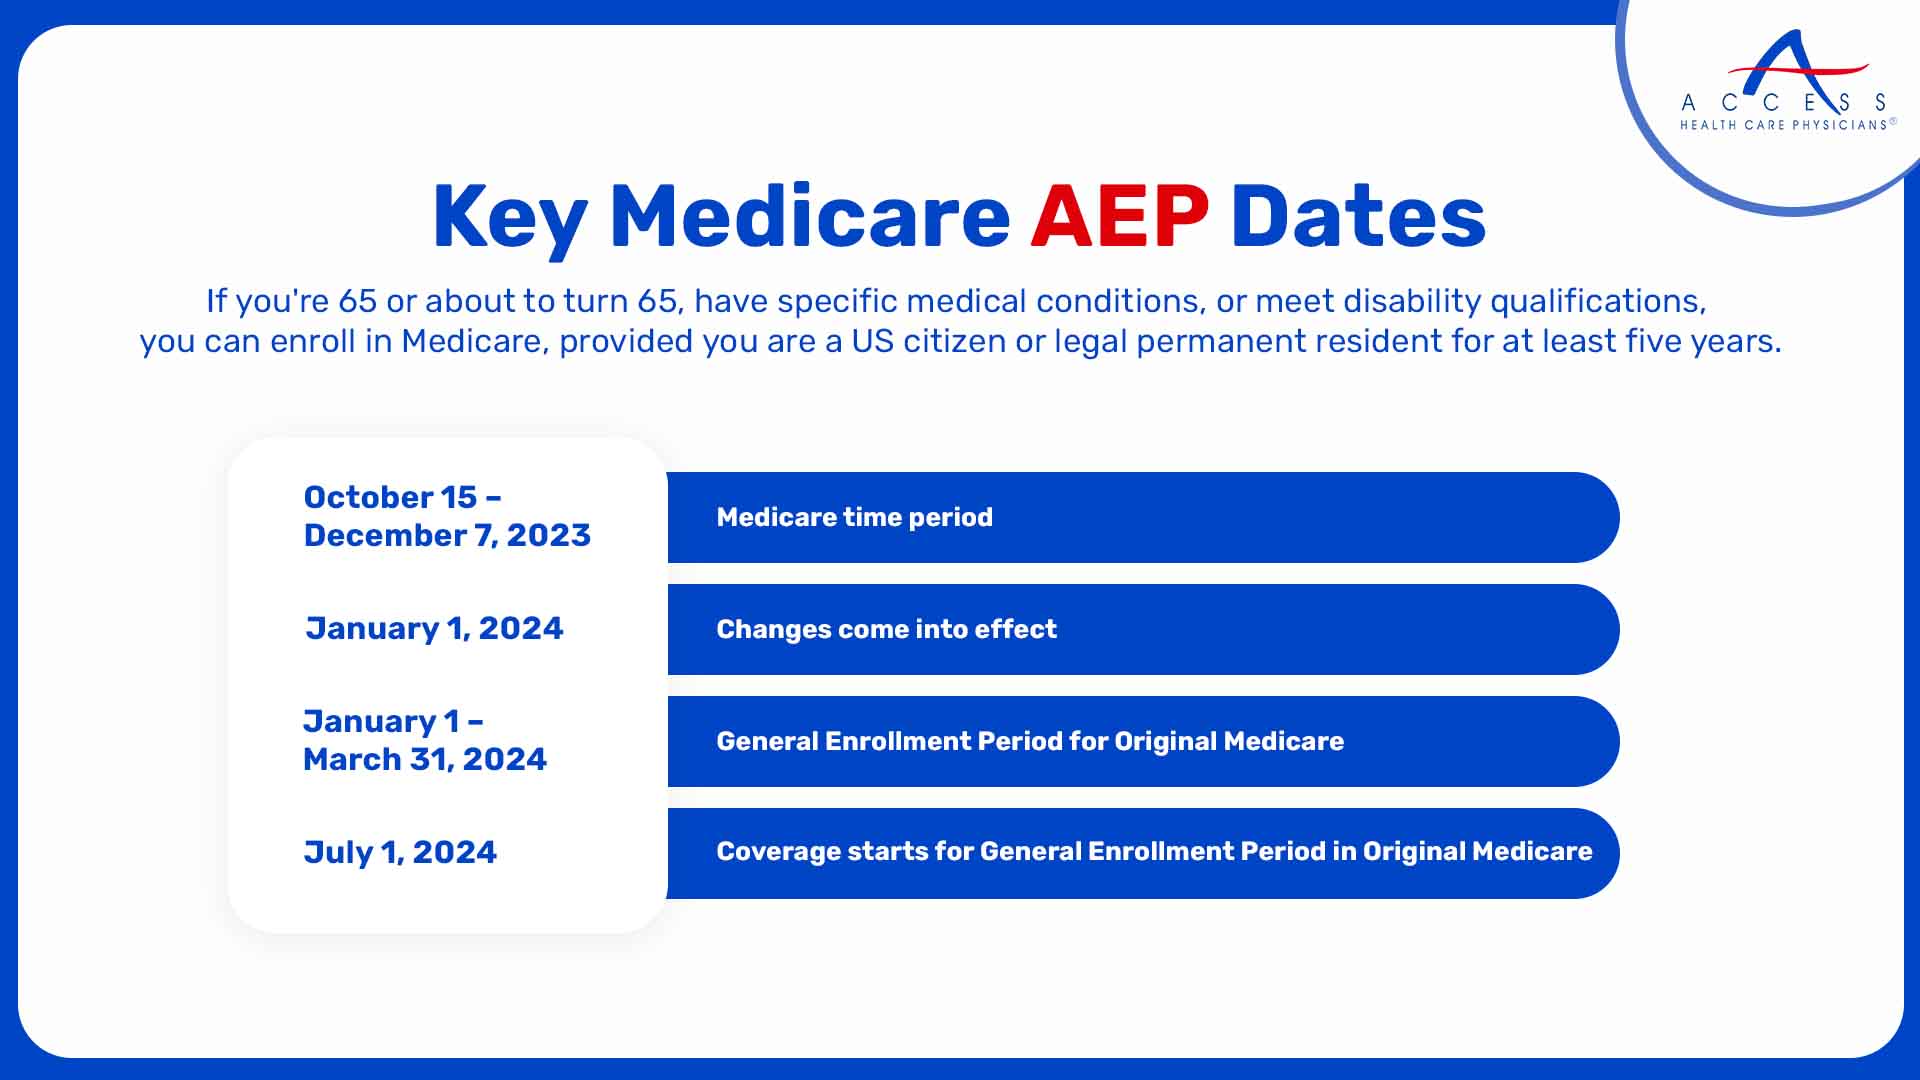 Key Medicare AEP Dates